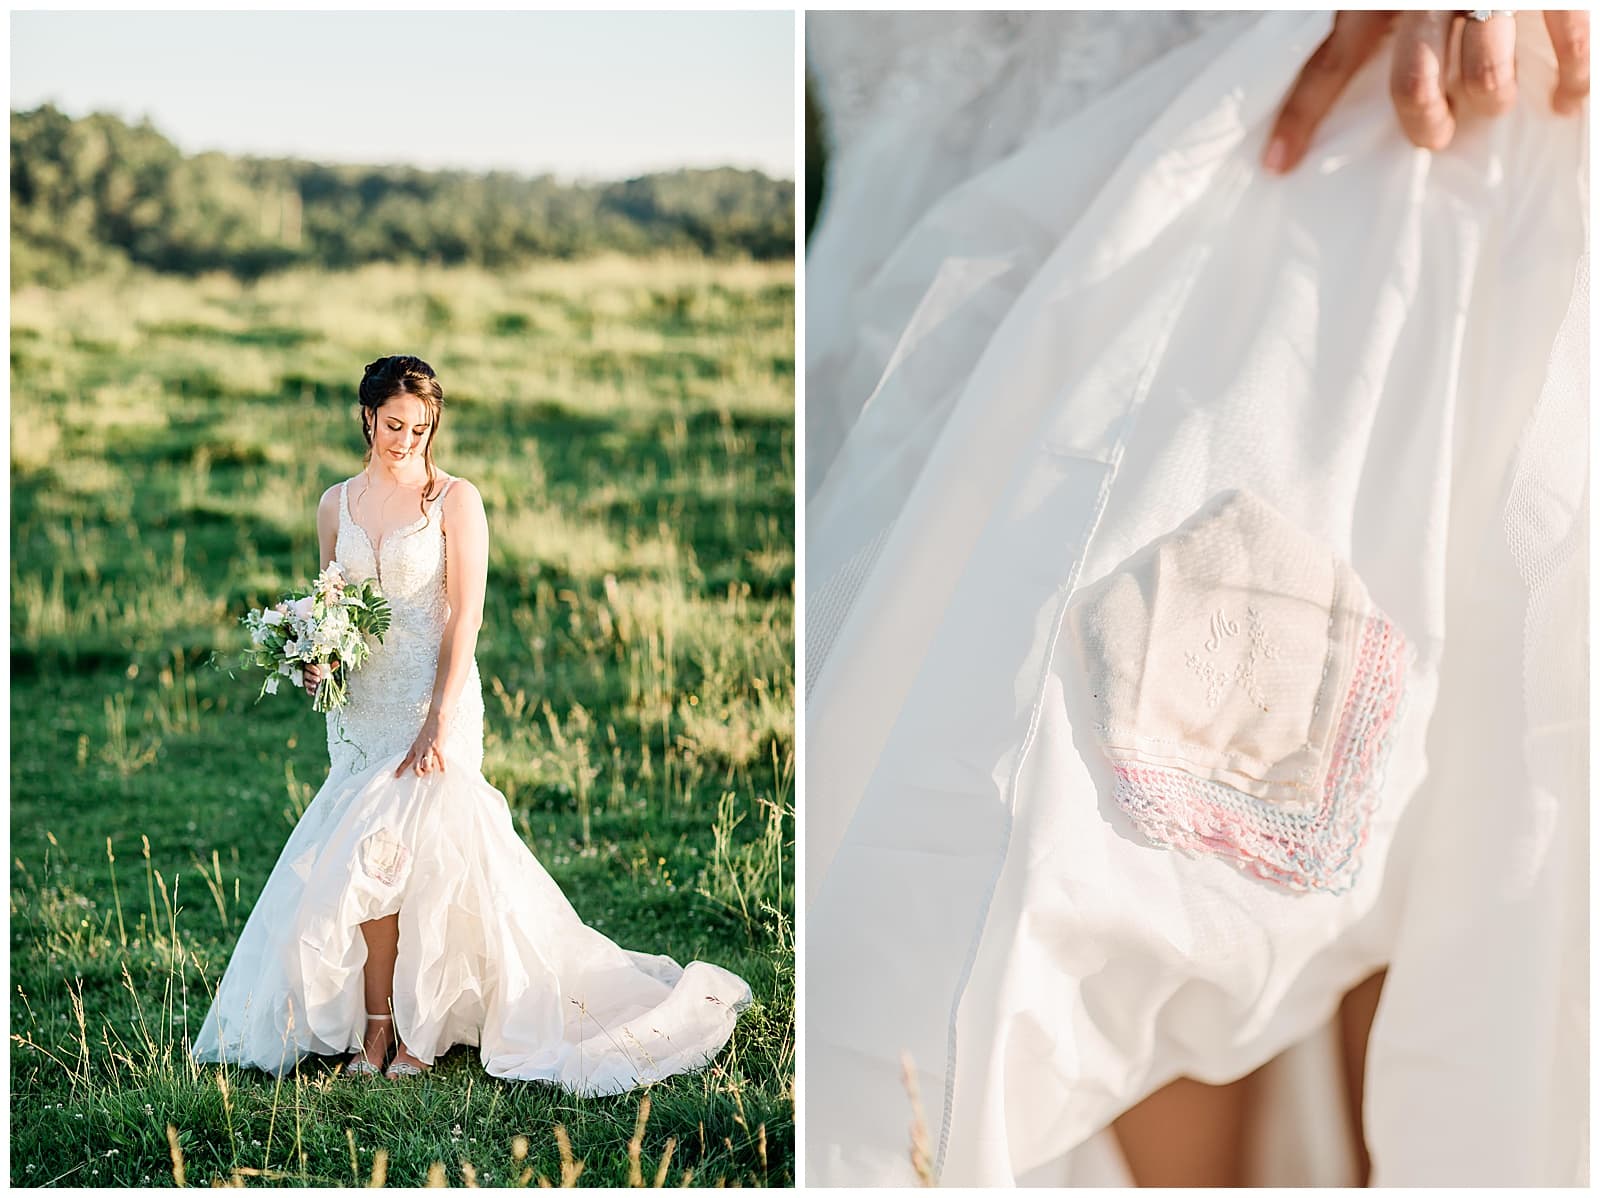 Danielle-Defayette-Photography-Middle-Fork-Barn-Abingdon-Wedding-2020_0011.jpg